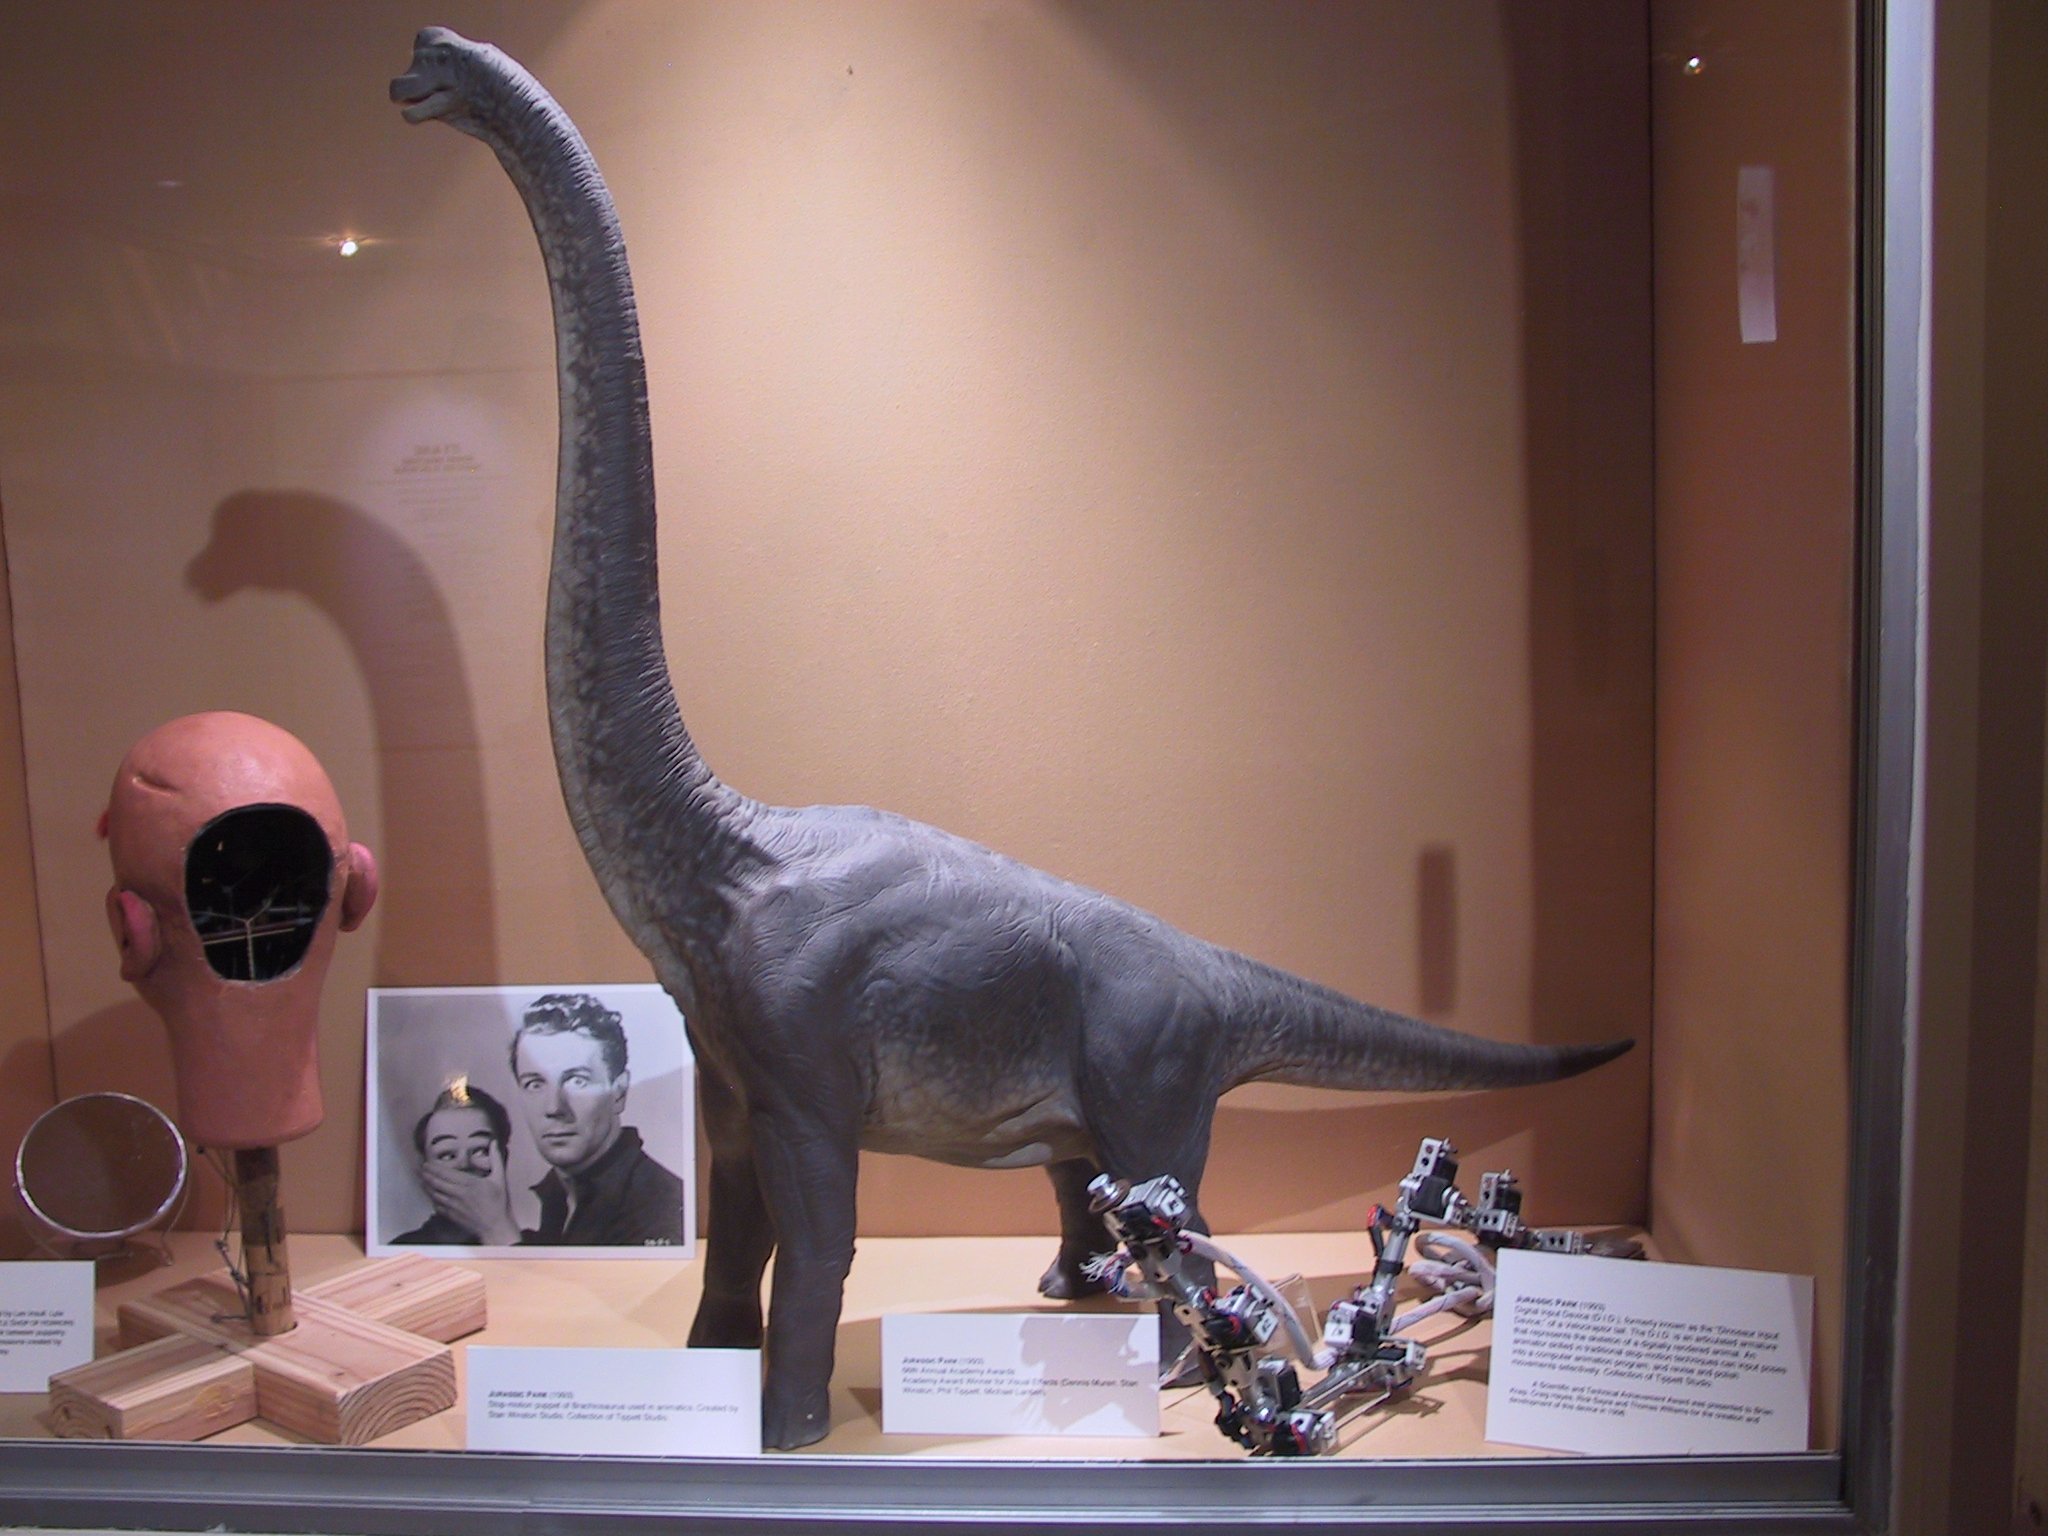 Image Animatronics Jurassic Park Park Pedia Jurassic Park Dinosaurs Stephen Spielberg 